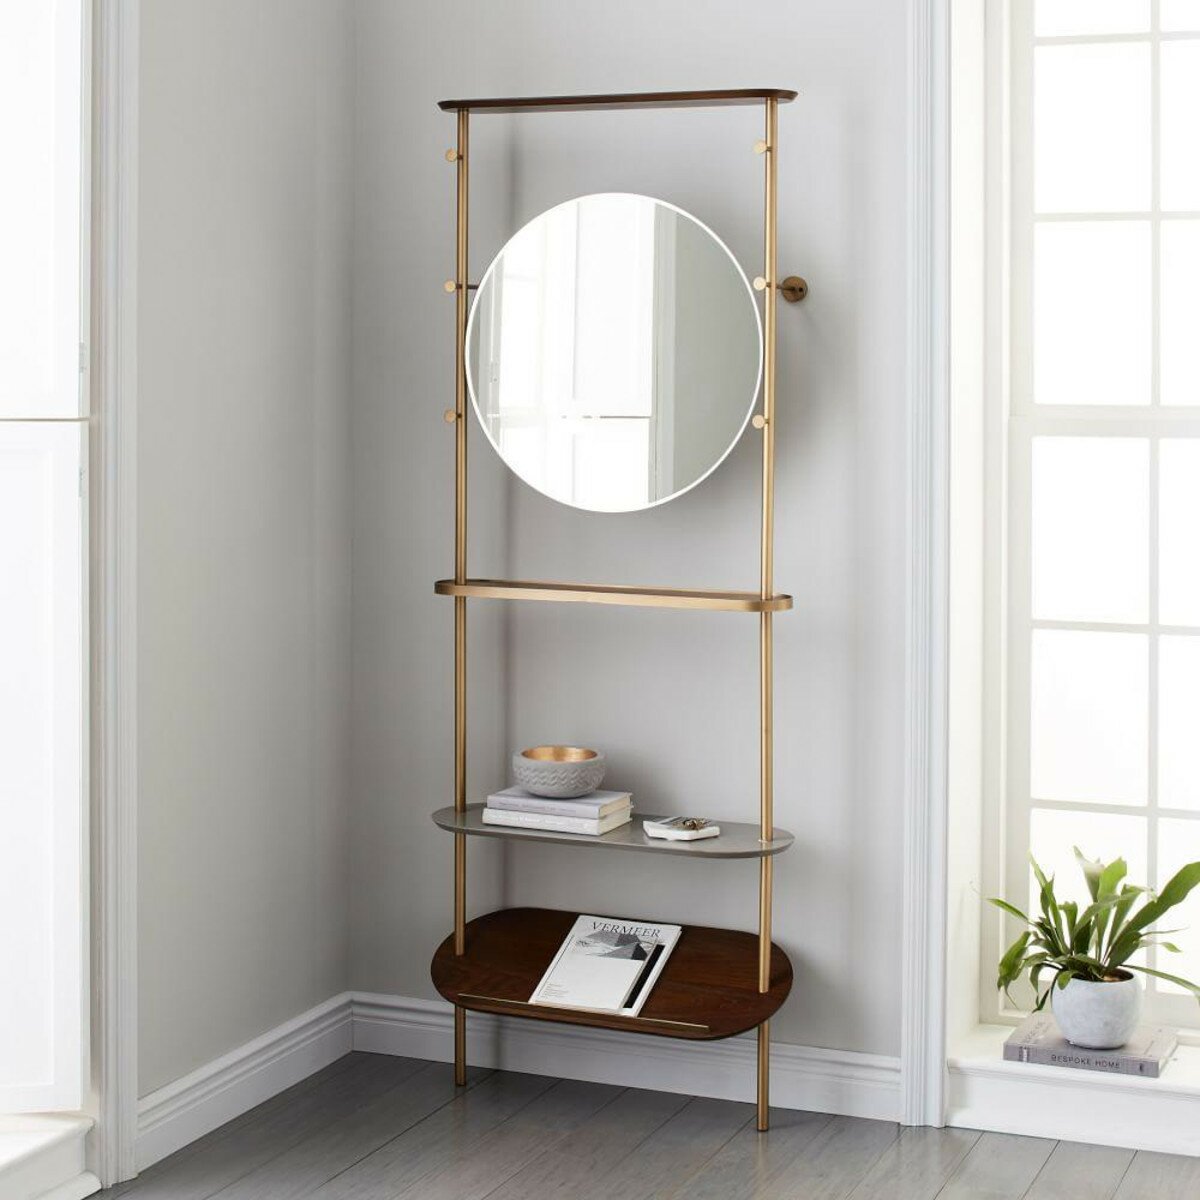 Entryway Mirror | Coat Rack With Mirror And Shelf | Entranceway Furniture